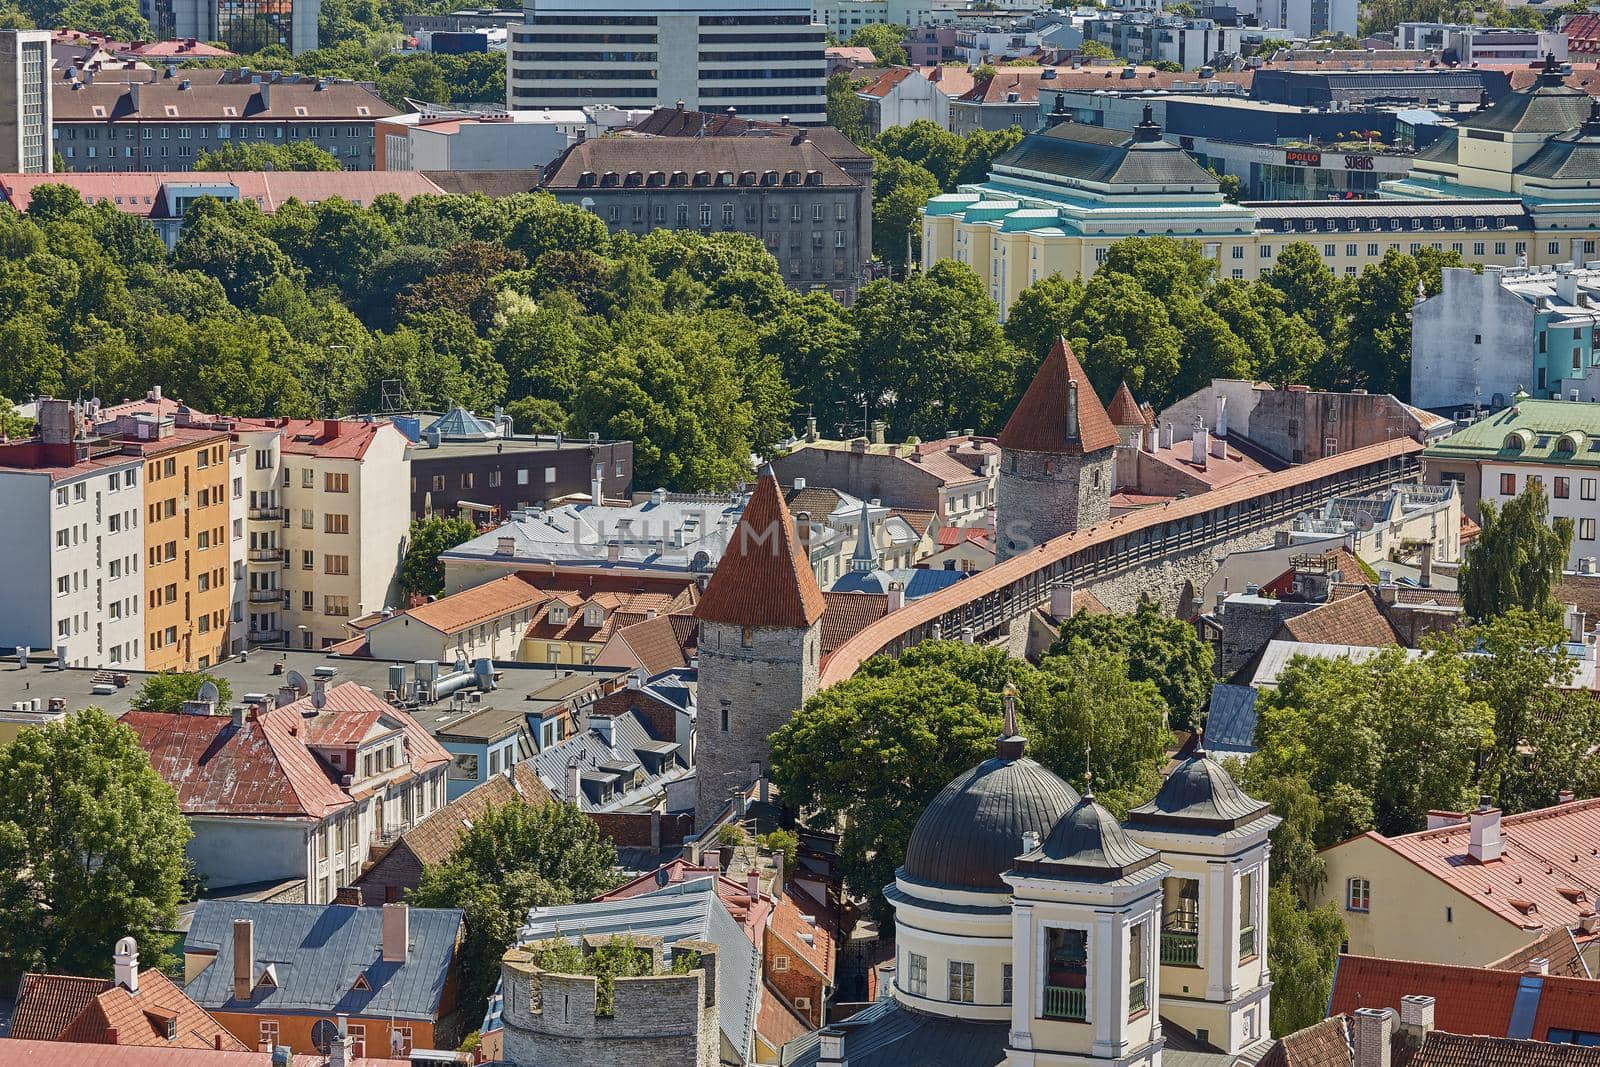 TALLINN, ESTONIA - JULY 07, 2017: Downtown architecture of old town city of Tallinn in Estonia.